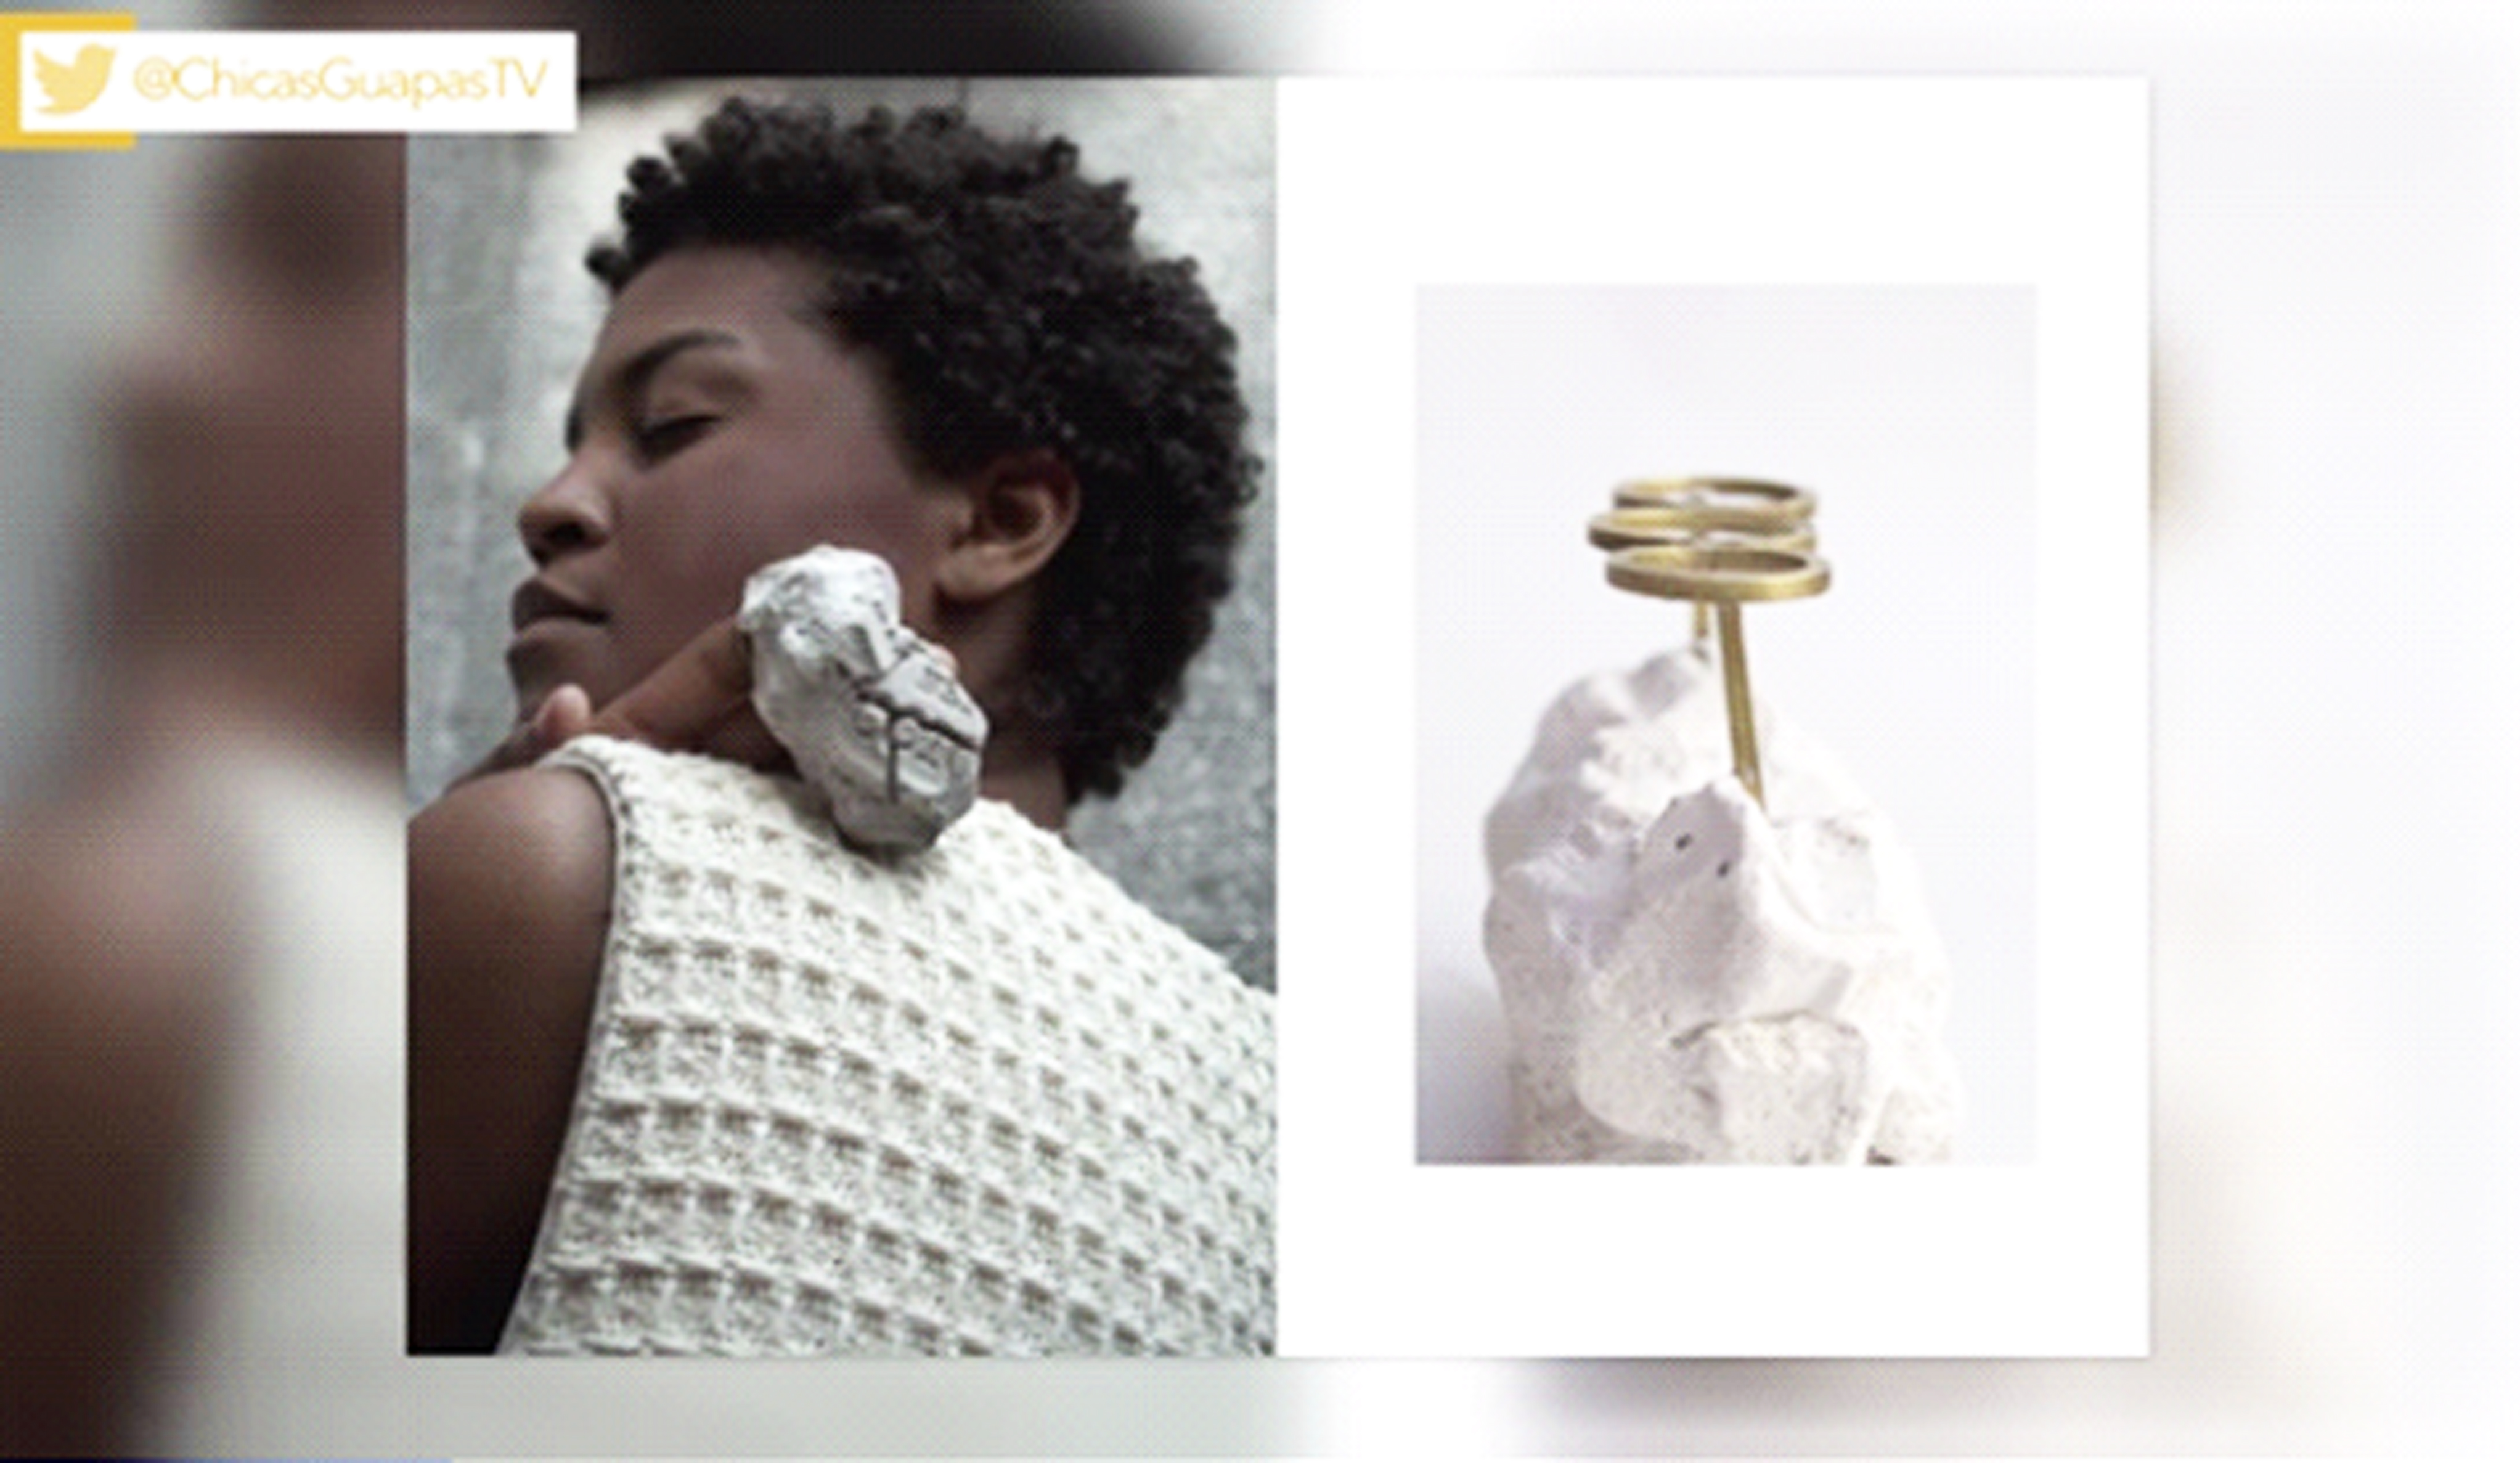 #FashionDesigner Chain – Garcia Bello diseño emergente consolidado